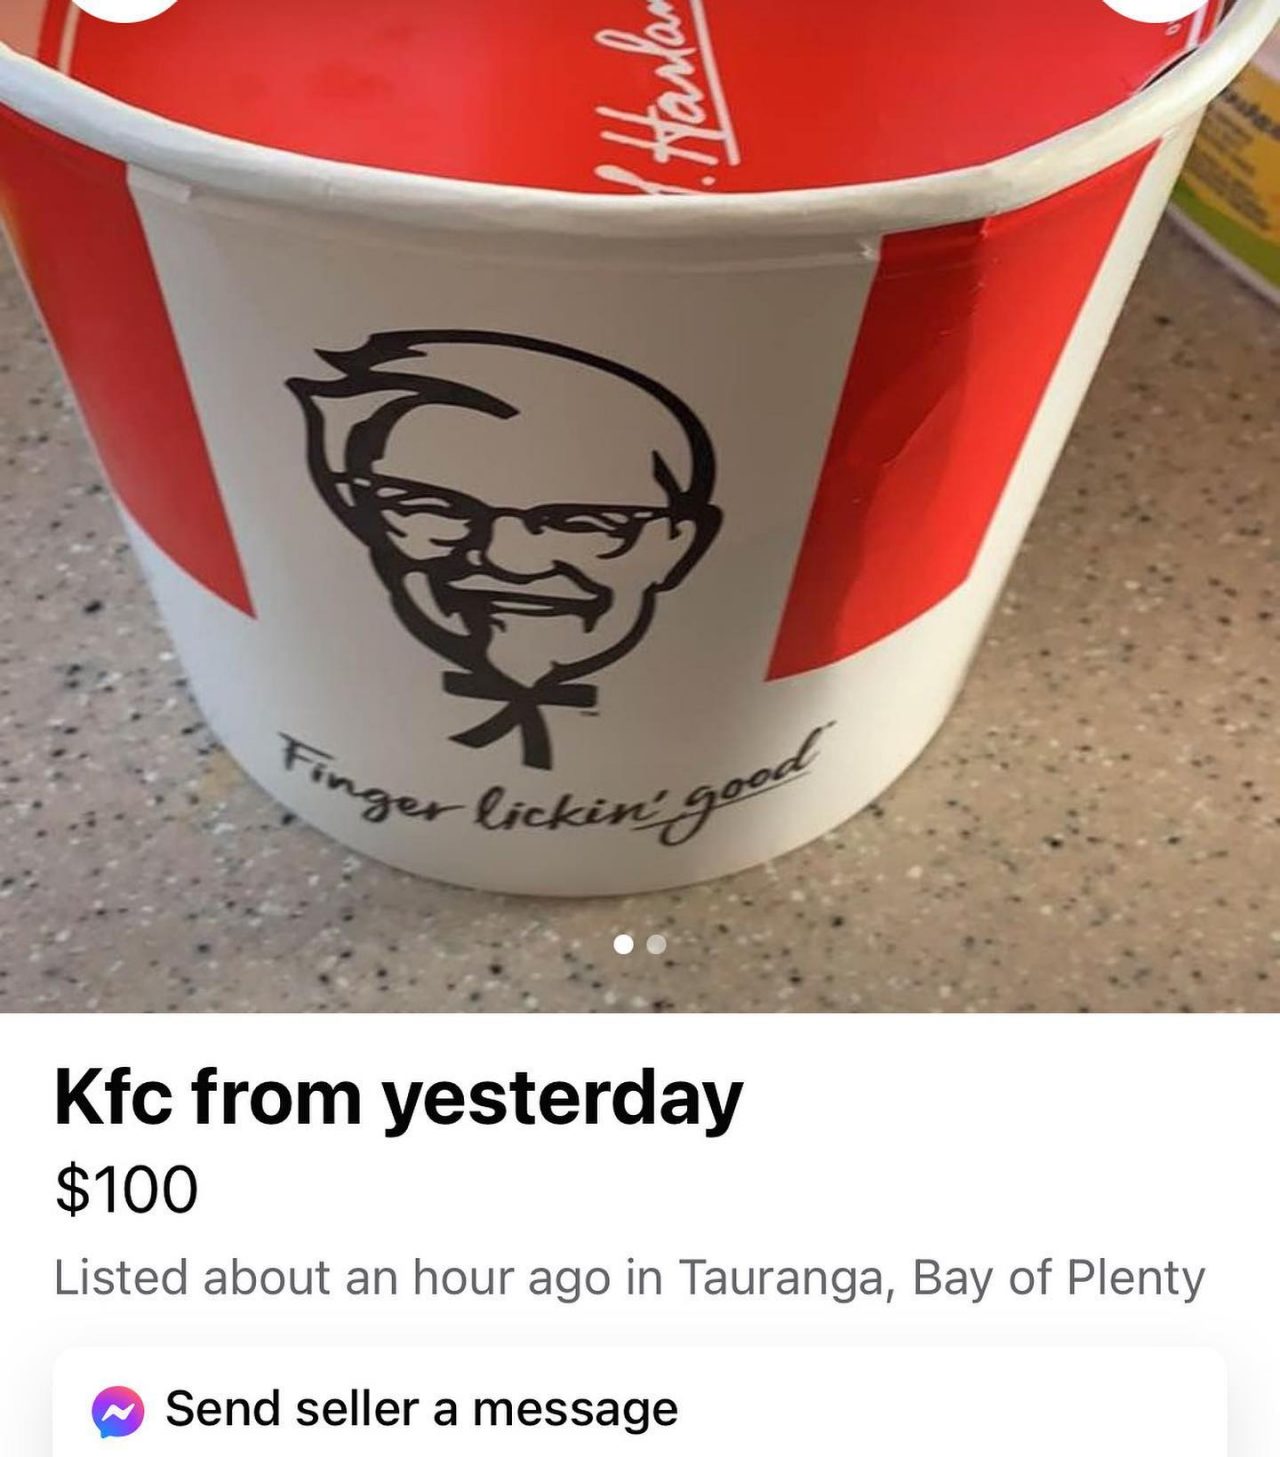 Tauranga man selling yesterday’s KFC on Facebook for $100